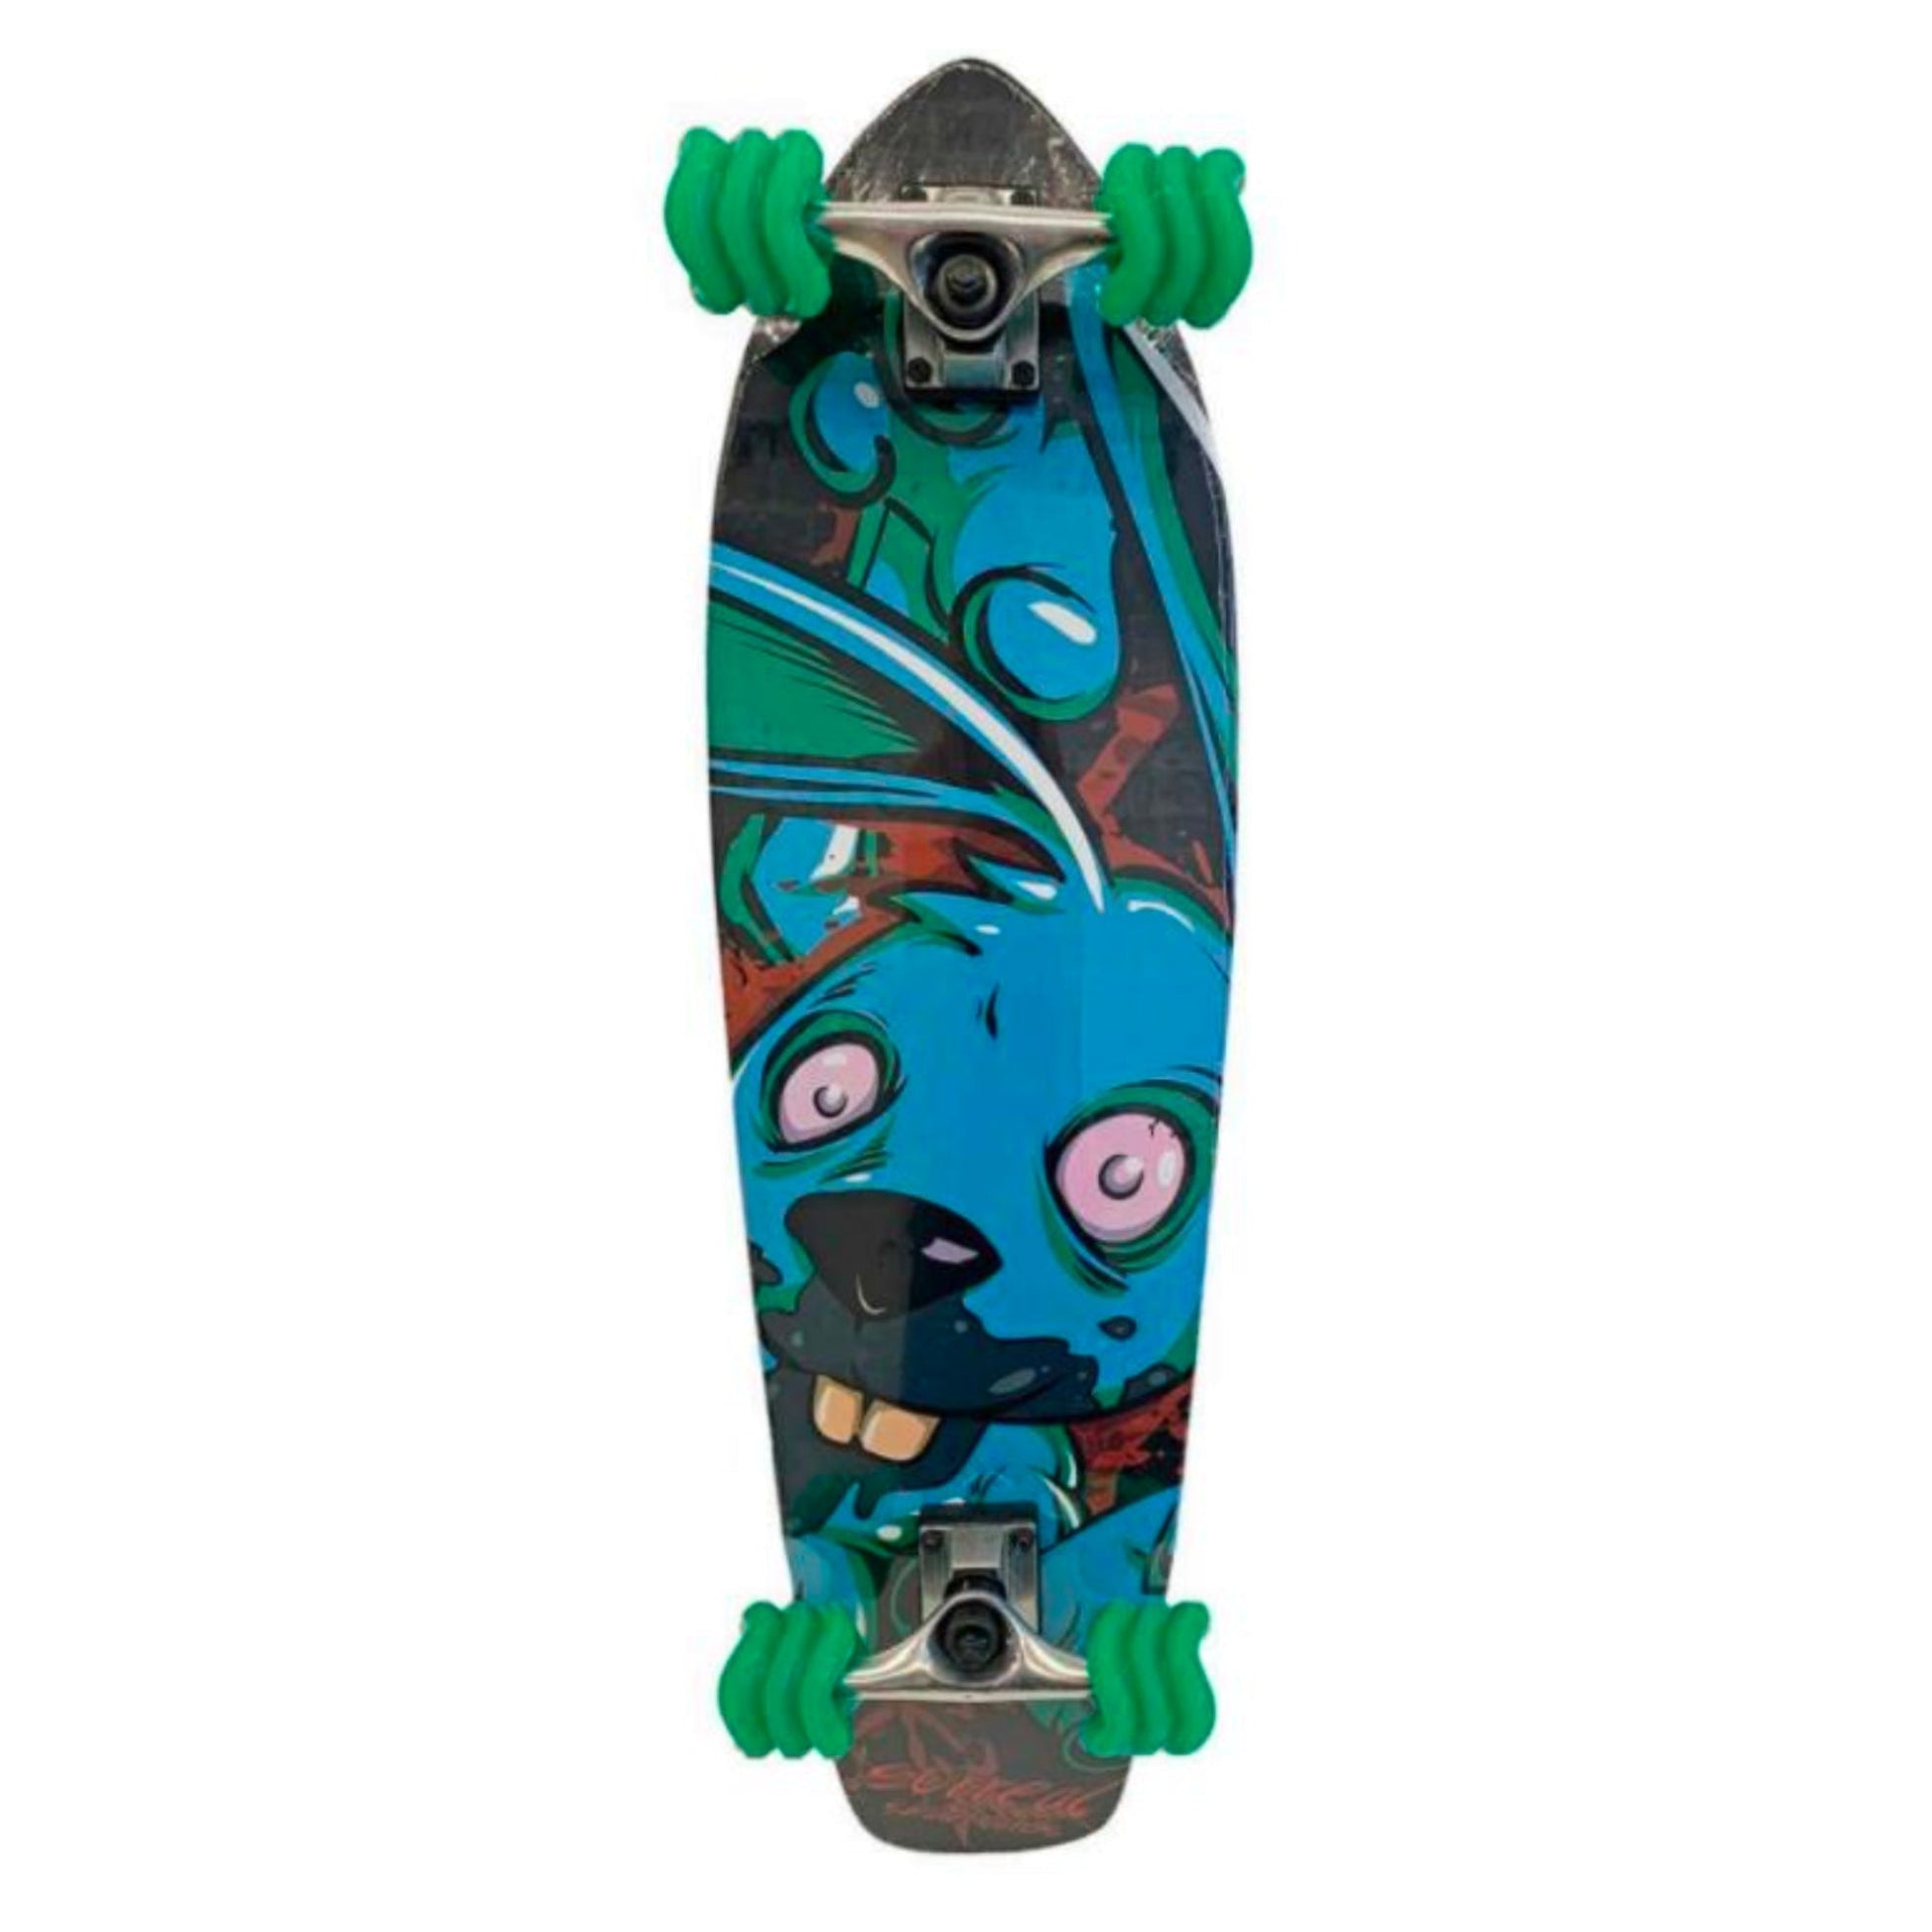 Colorful Skull Cruiser Skateboard With Shark Wheels